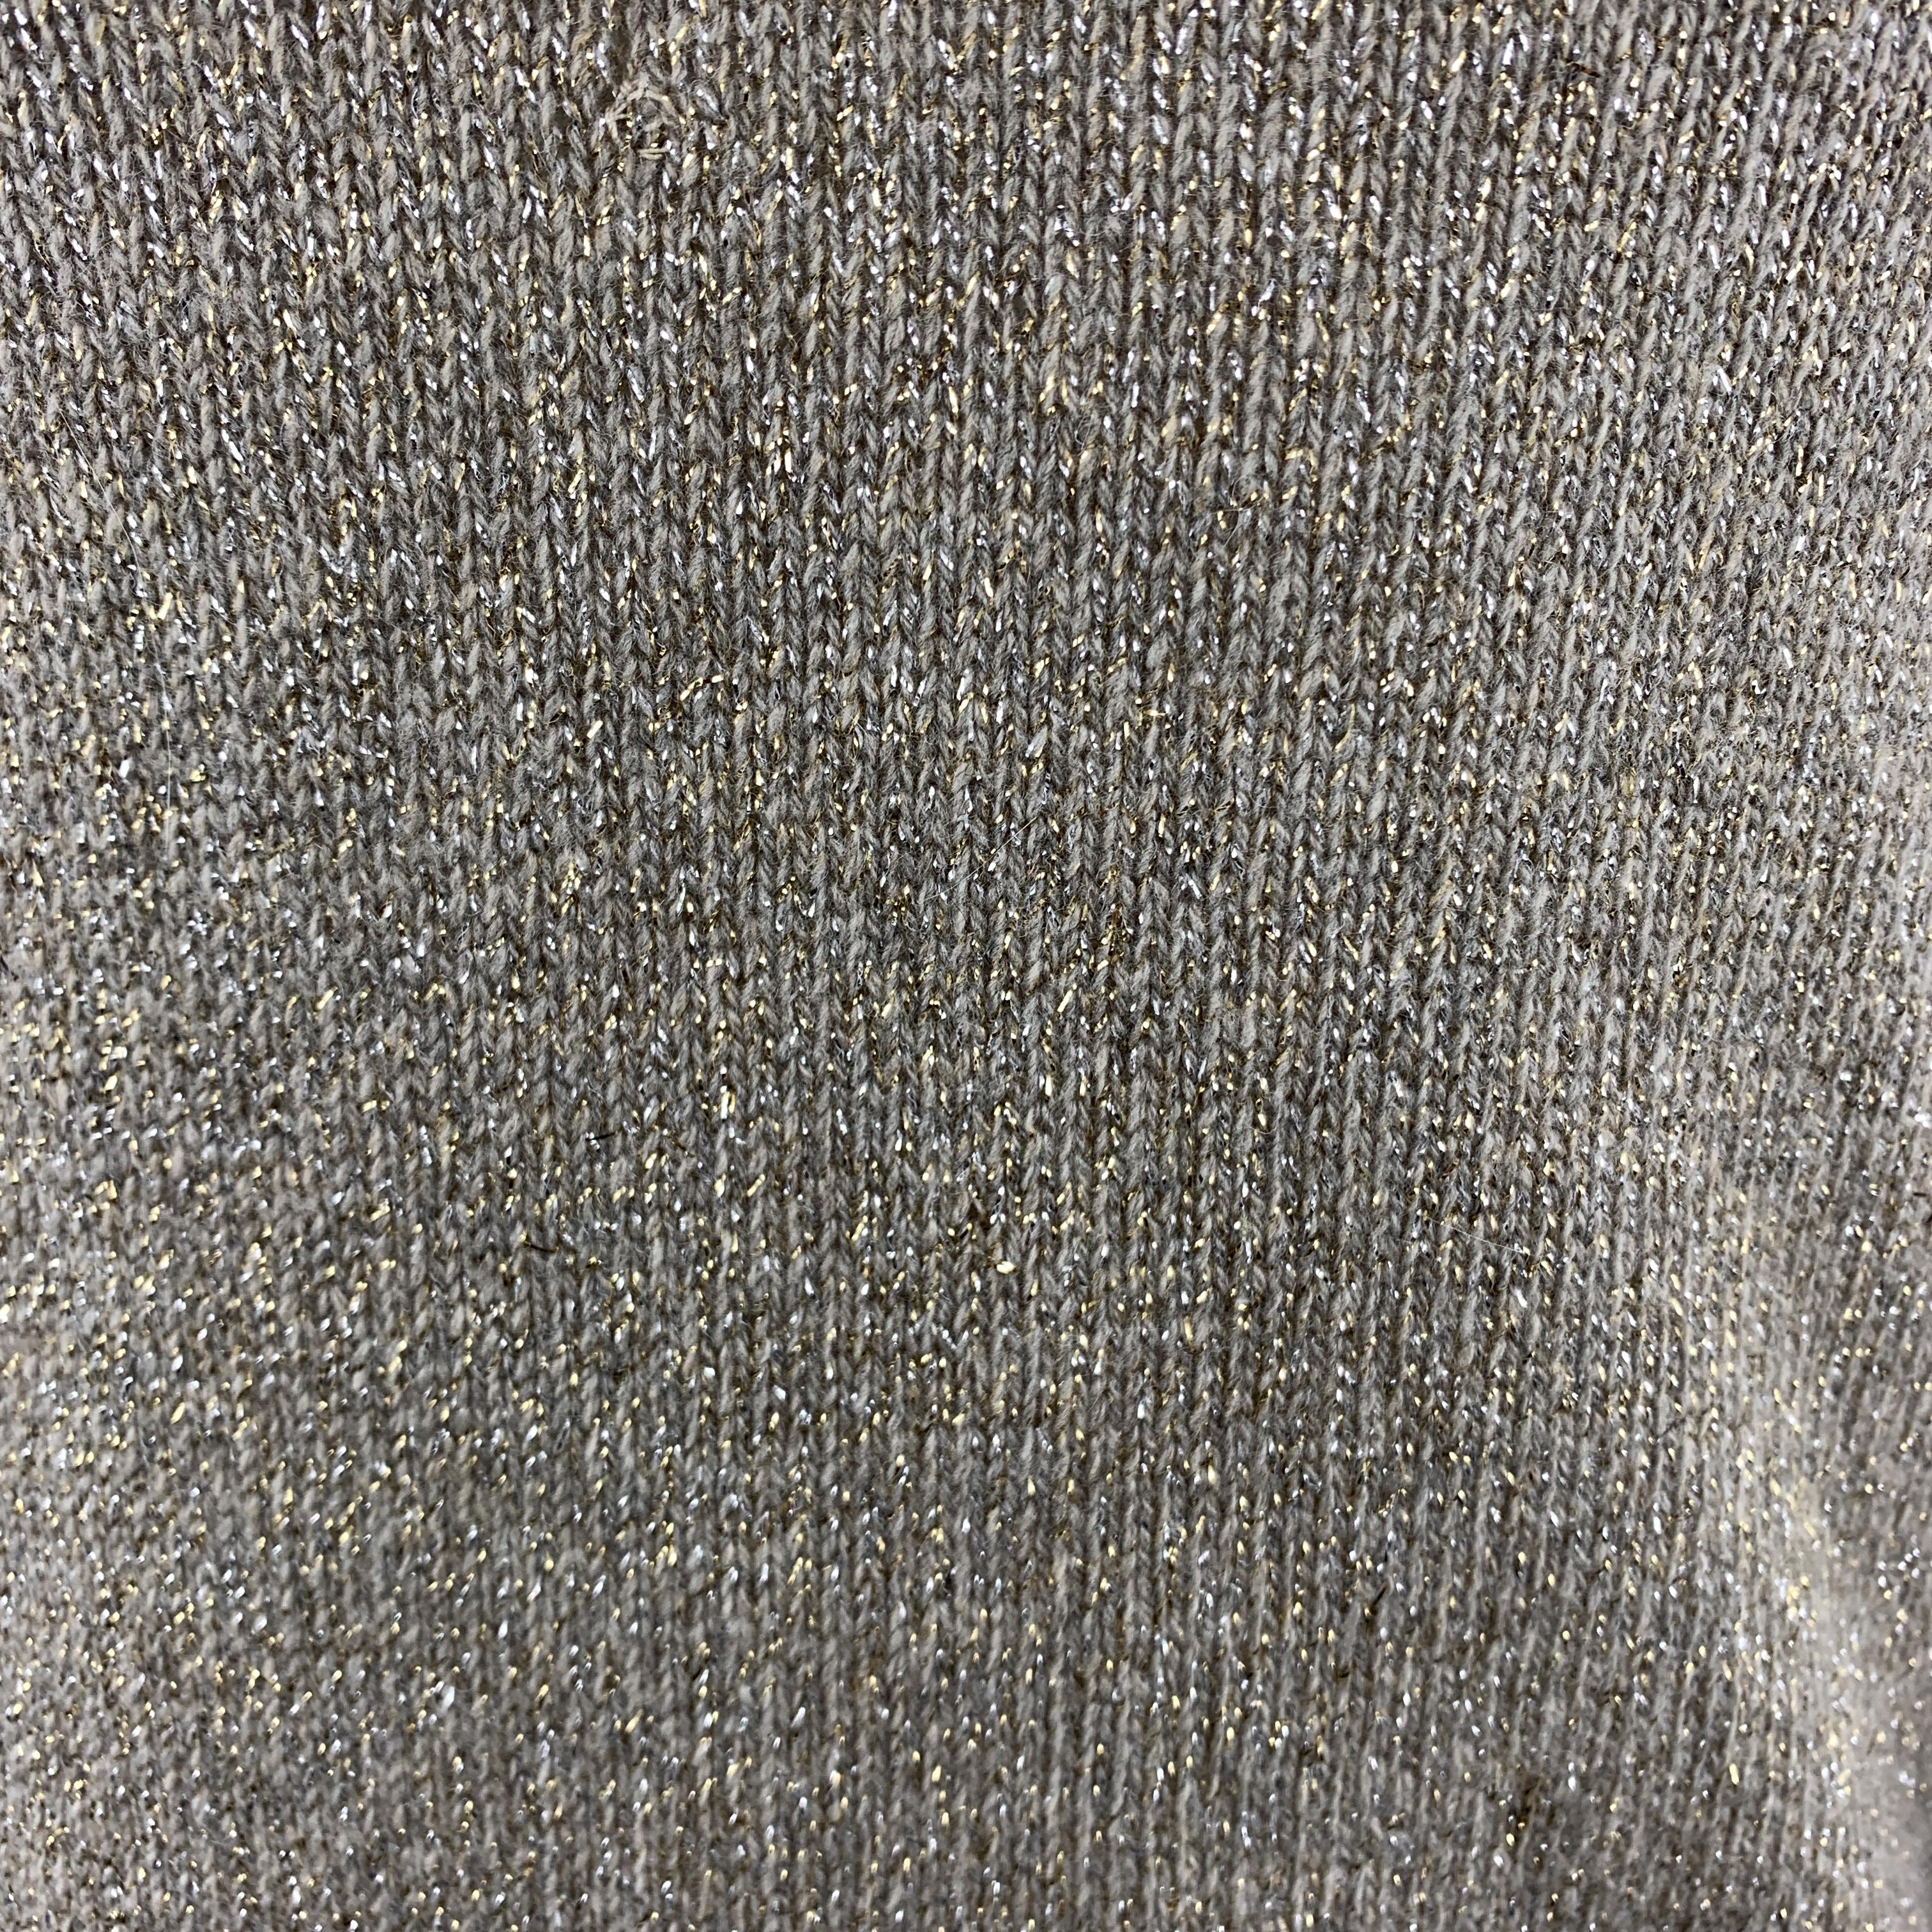 sparkle season sweater